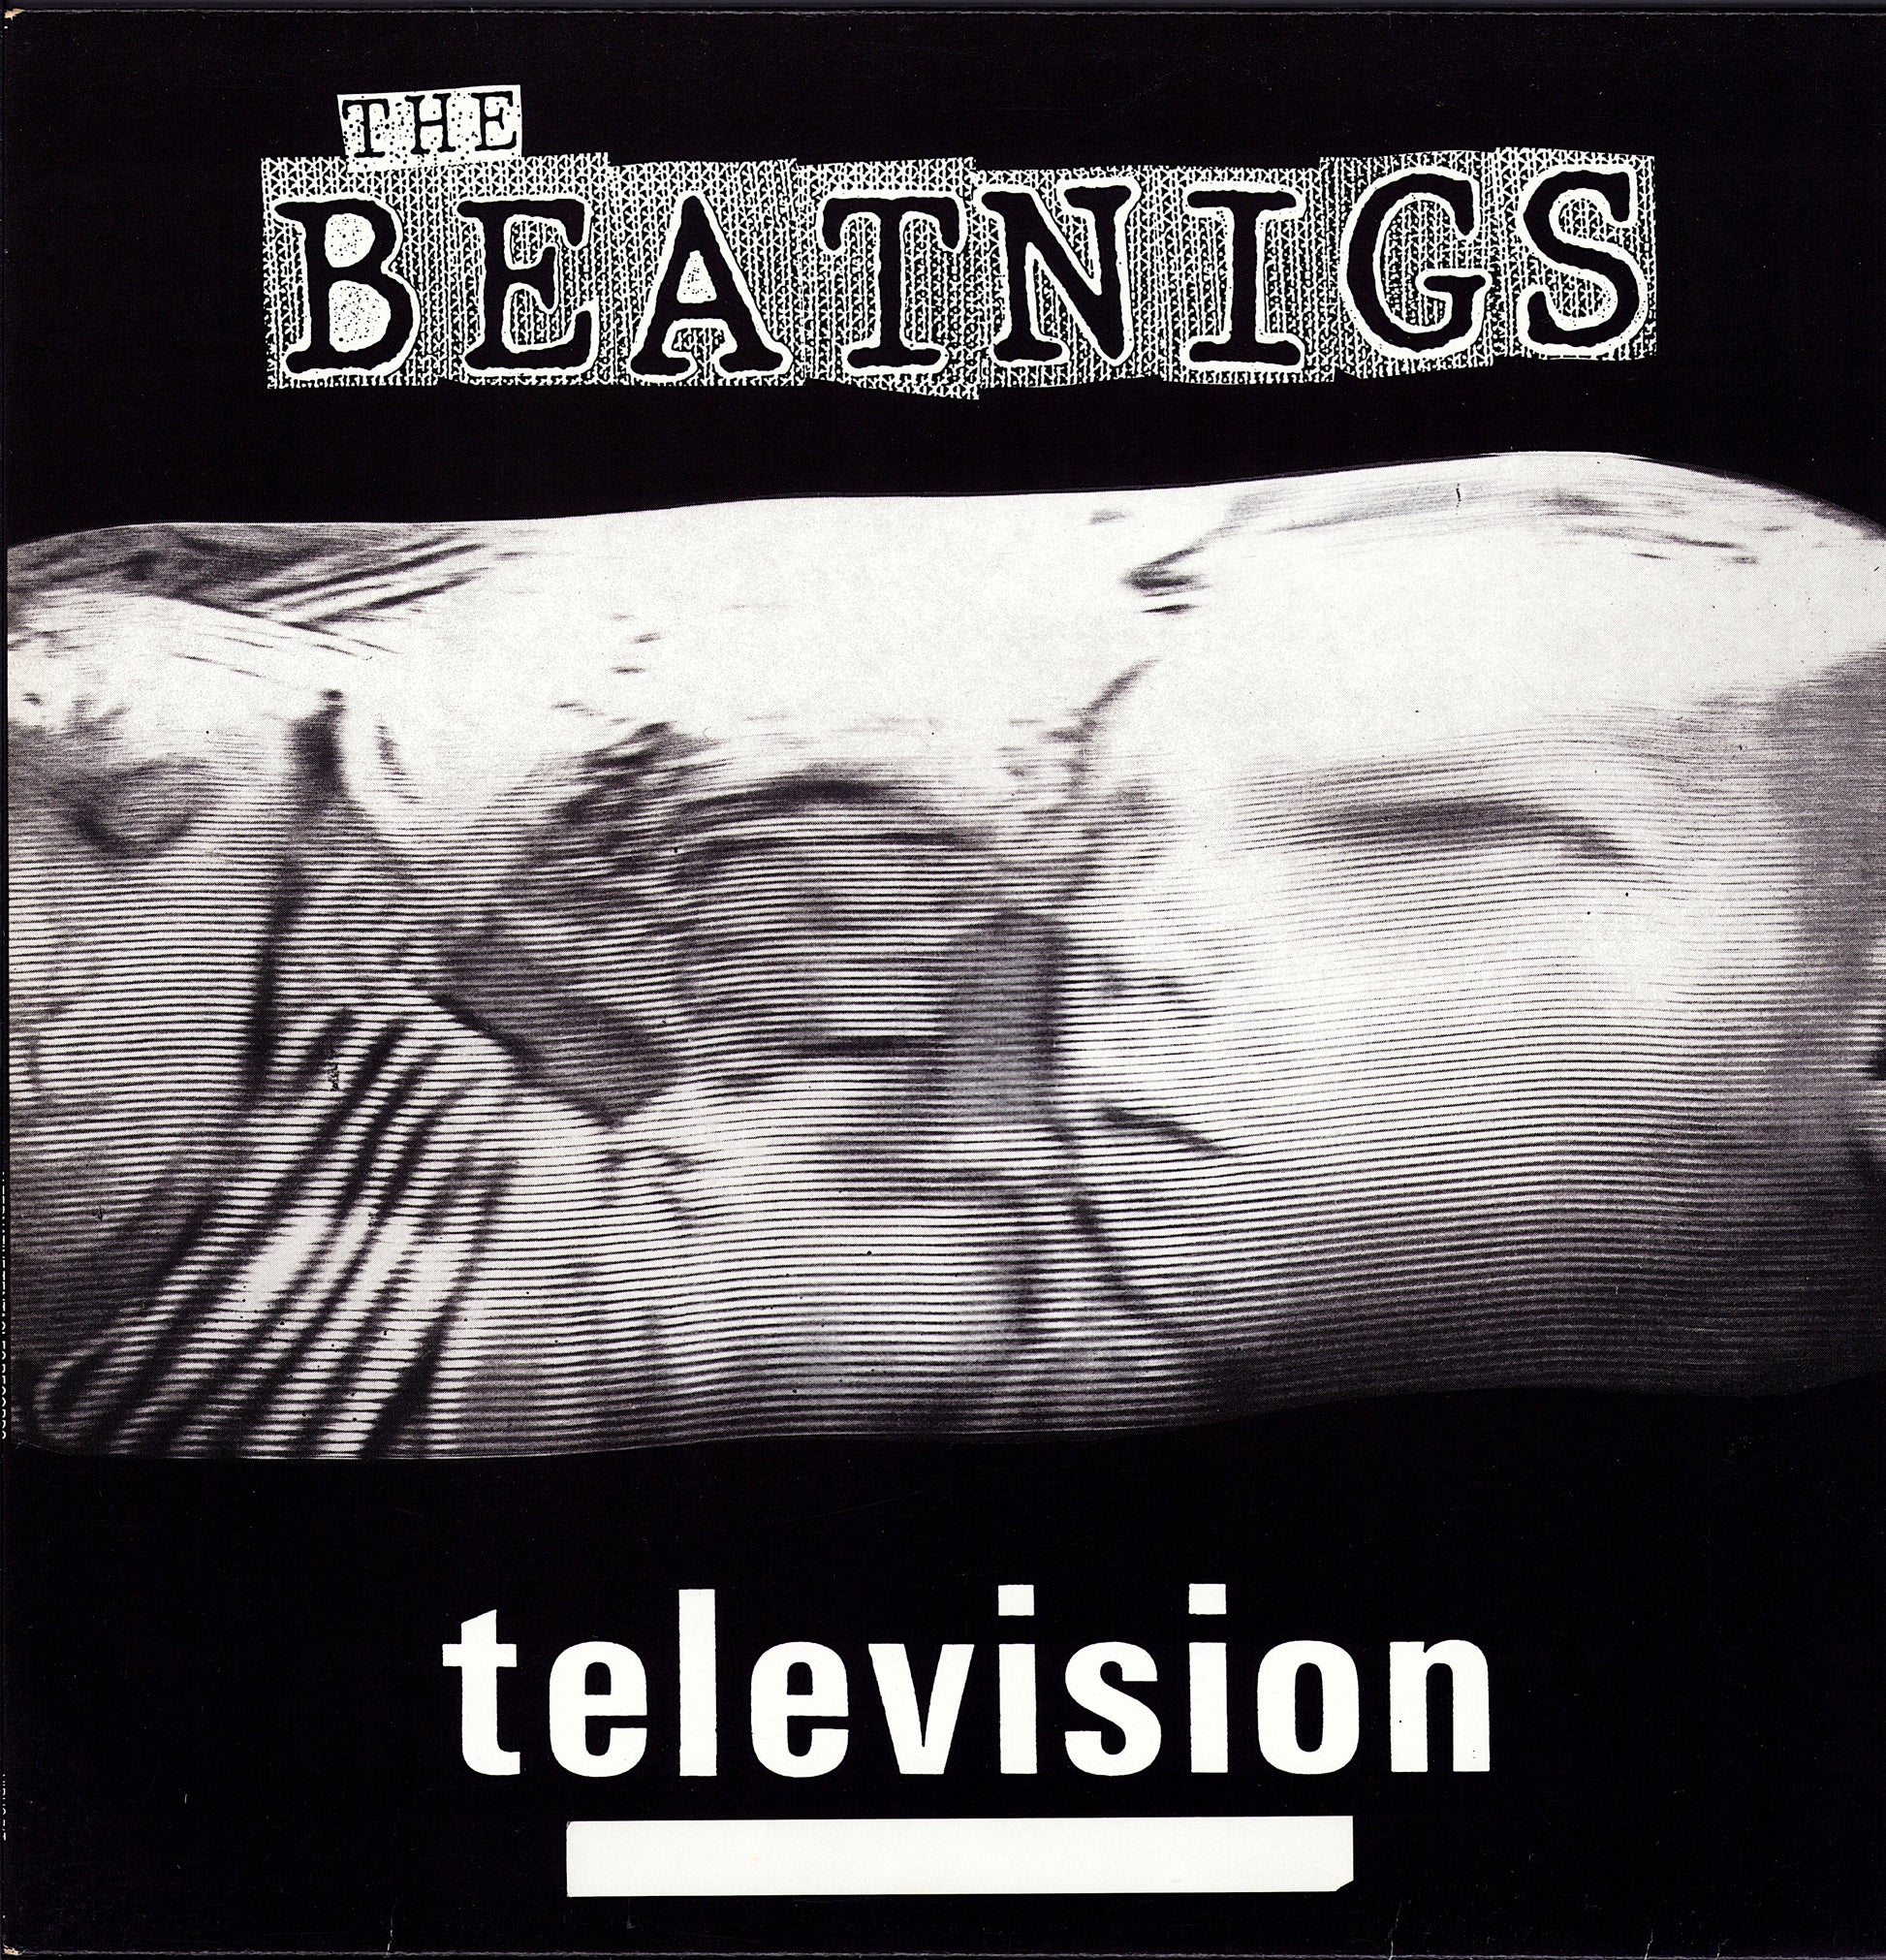 The Beatnigs - Television (Vinyl 12")